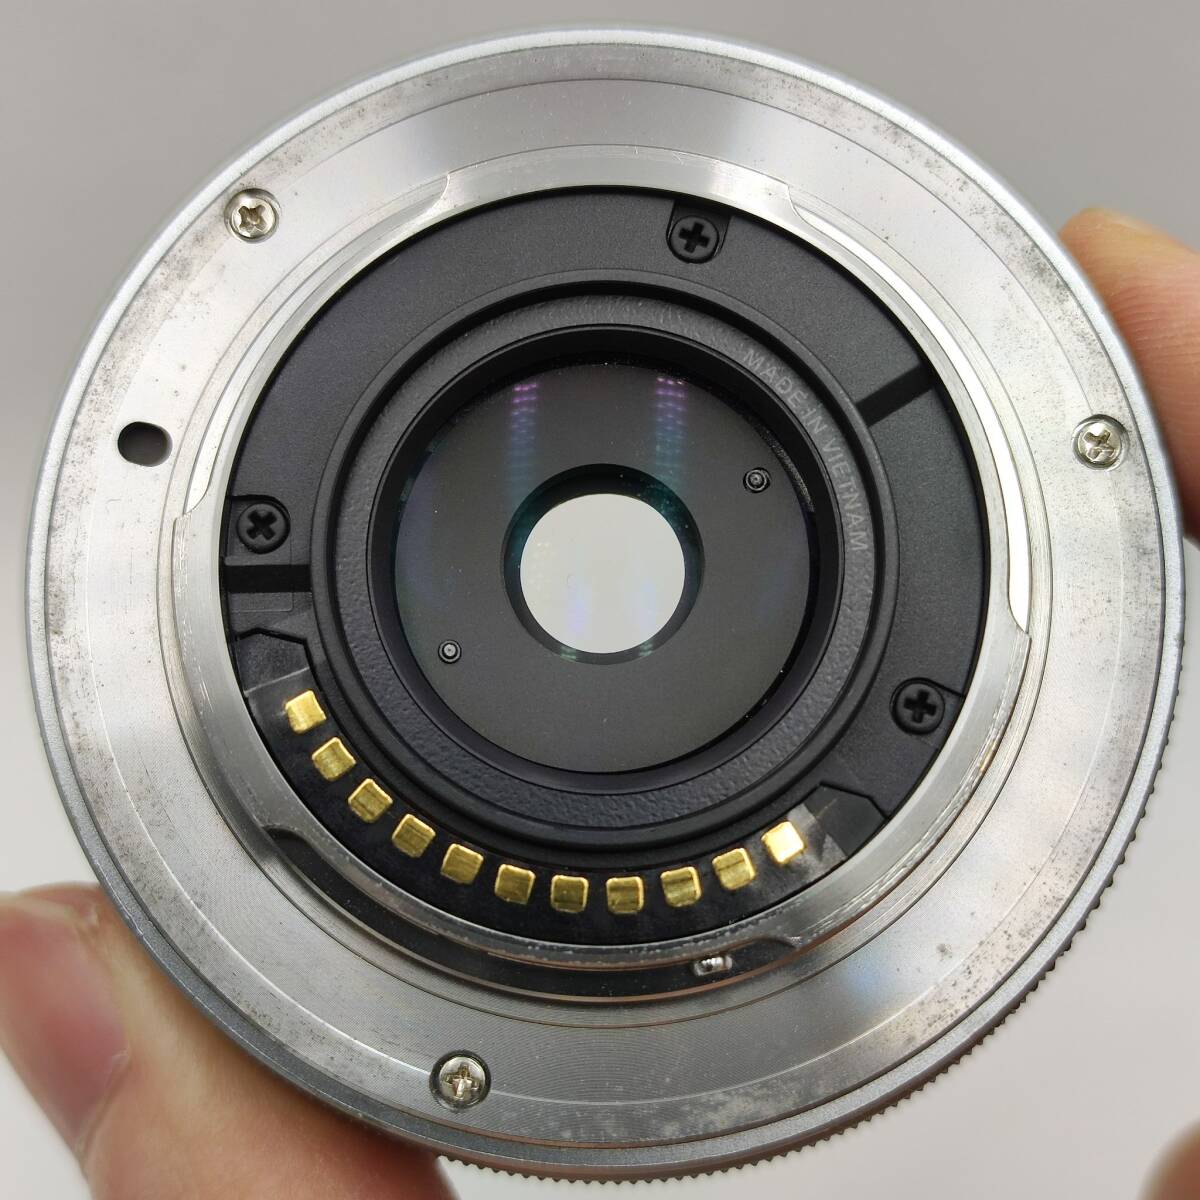 BCm145I 60 OLYMPUS PEN E-PL9 ペン ミラーレス一眼レフカメラ microSD1GB付き レンズ M.ZUIKO DIGITAL 14-42mm 1:3.5-5.6 タッチパネル_画像10